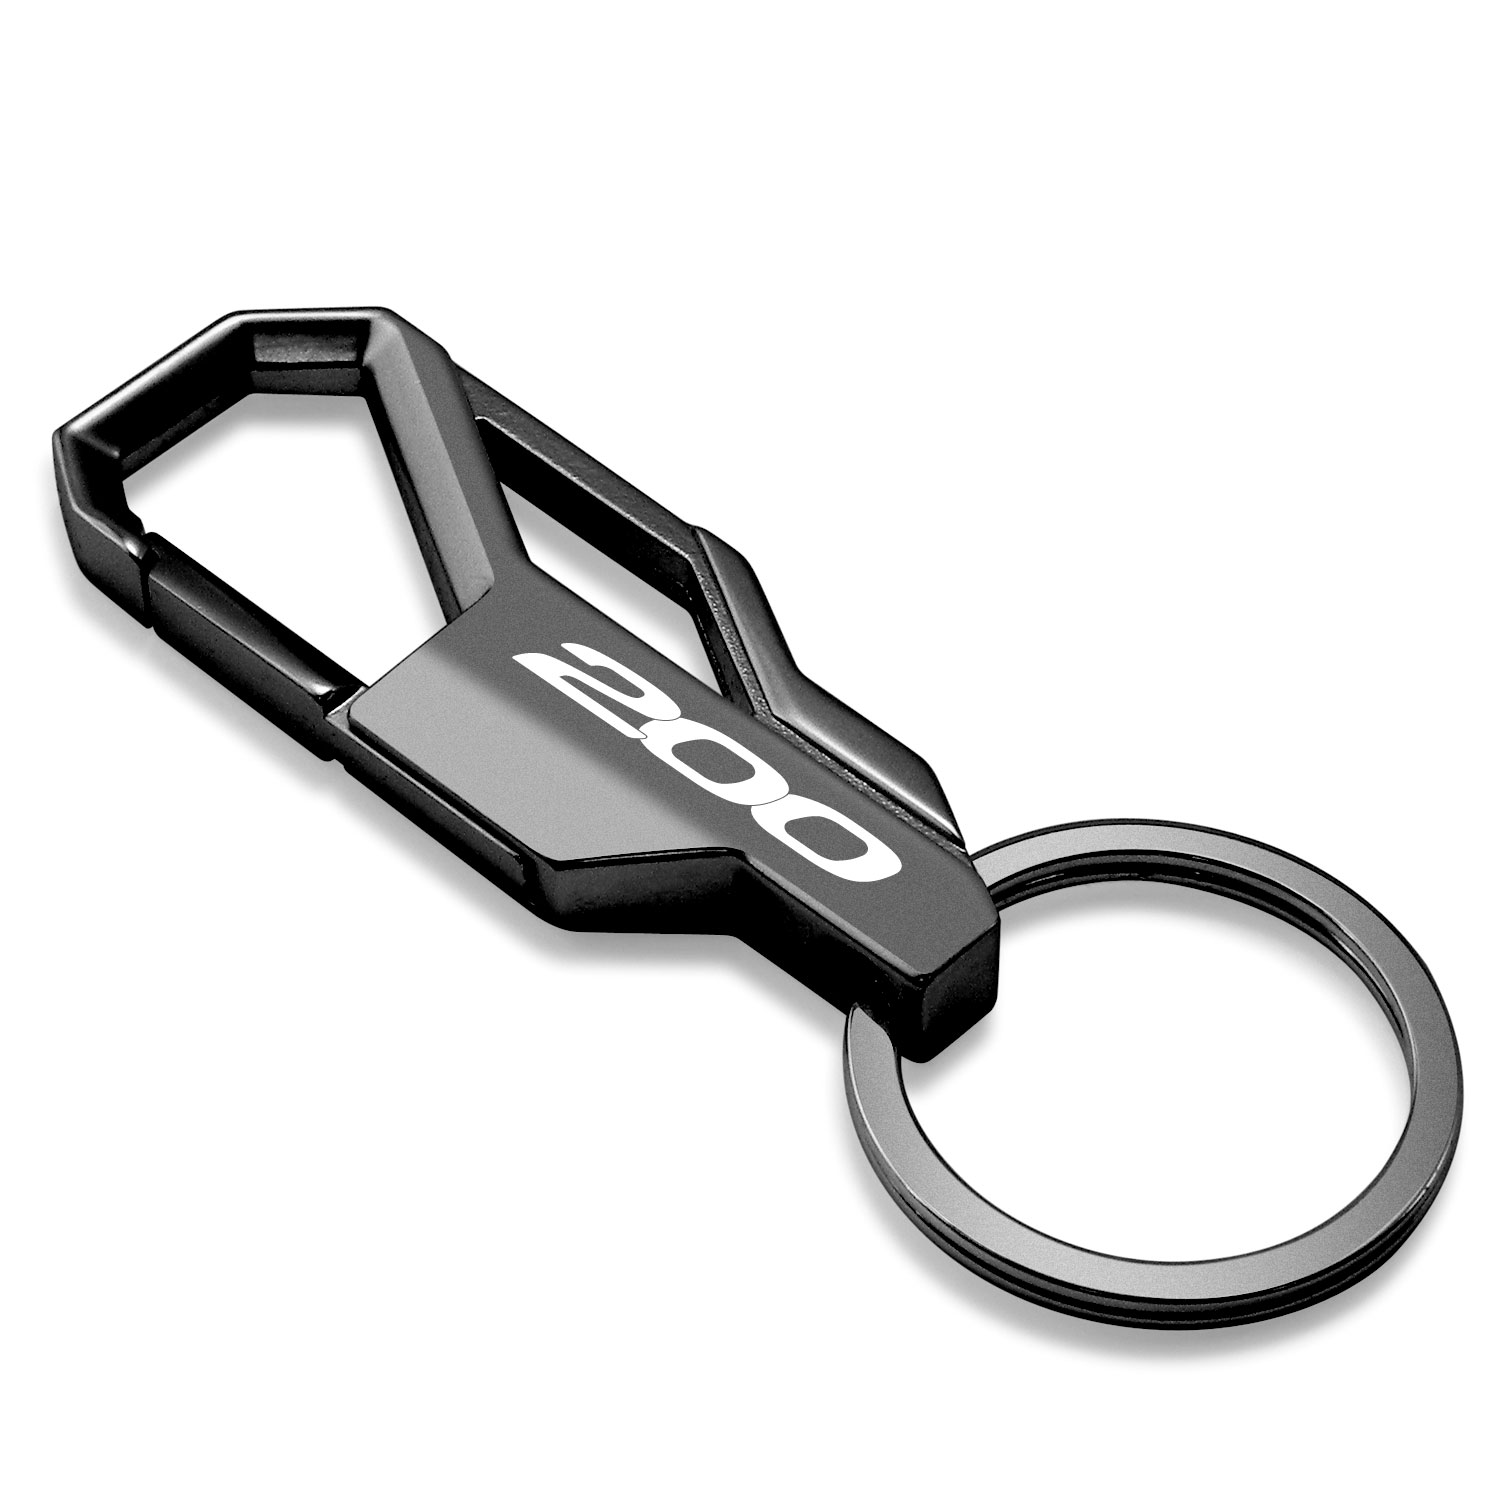 Chrysler Logo Gunmetal Black Carabiner-style Snap Hook Metal Key Chain Keychain